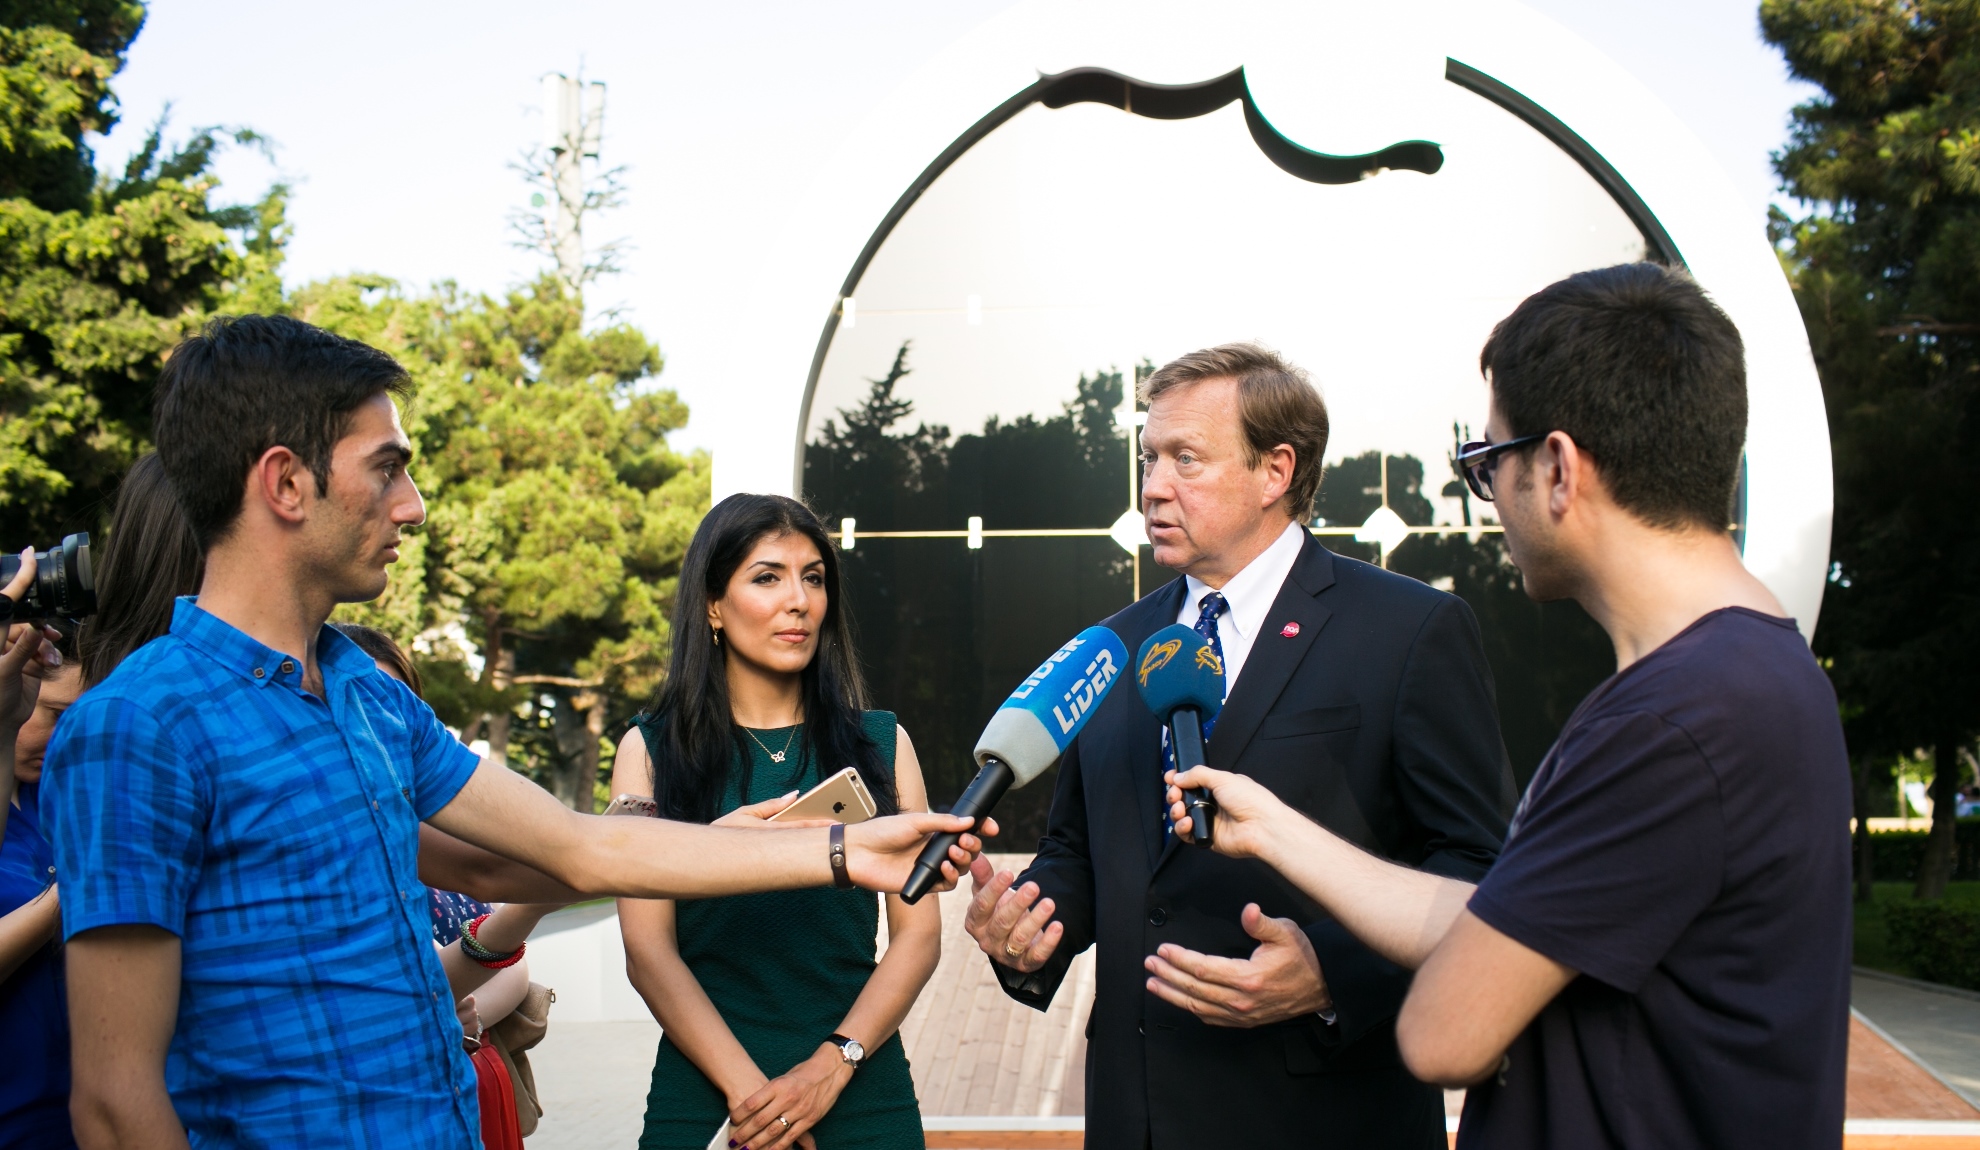 Nar Showcases a Pavilion Dedicated To the Partnership With Baku – 2015 European Games